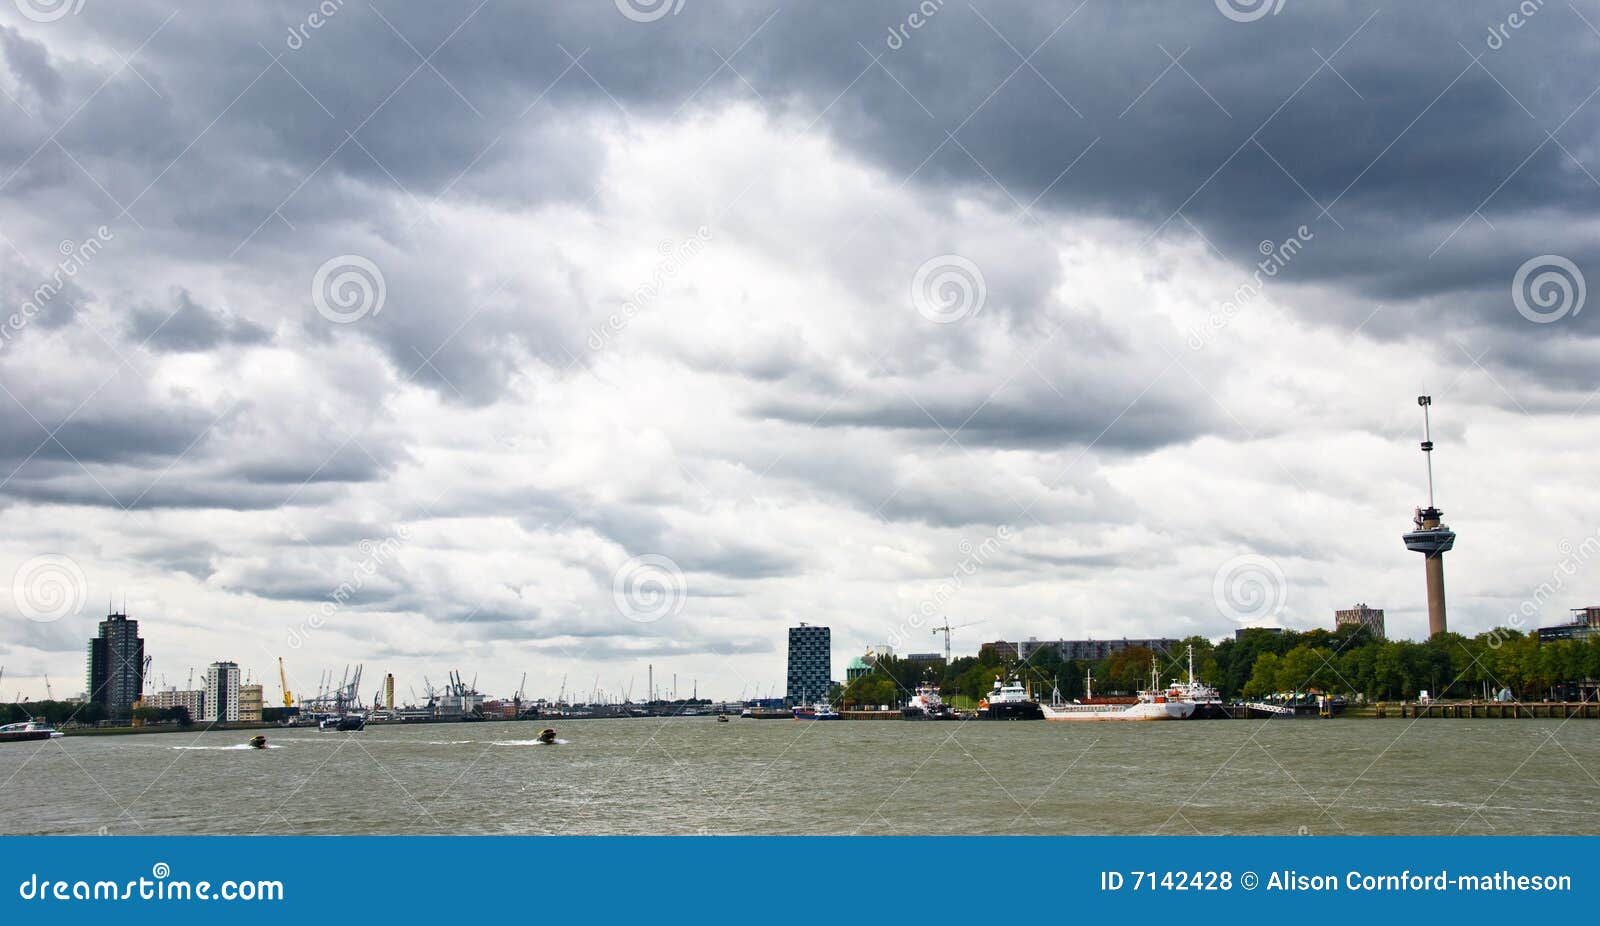 Rotterdam Harbor stock photo. Image of century, maas, cloud - 7142428